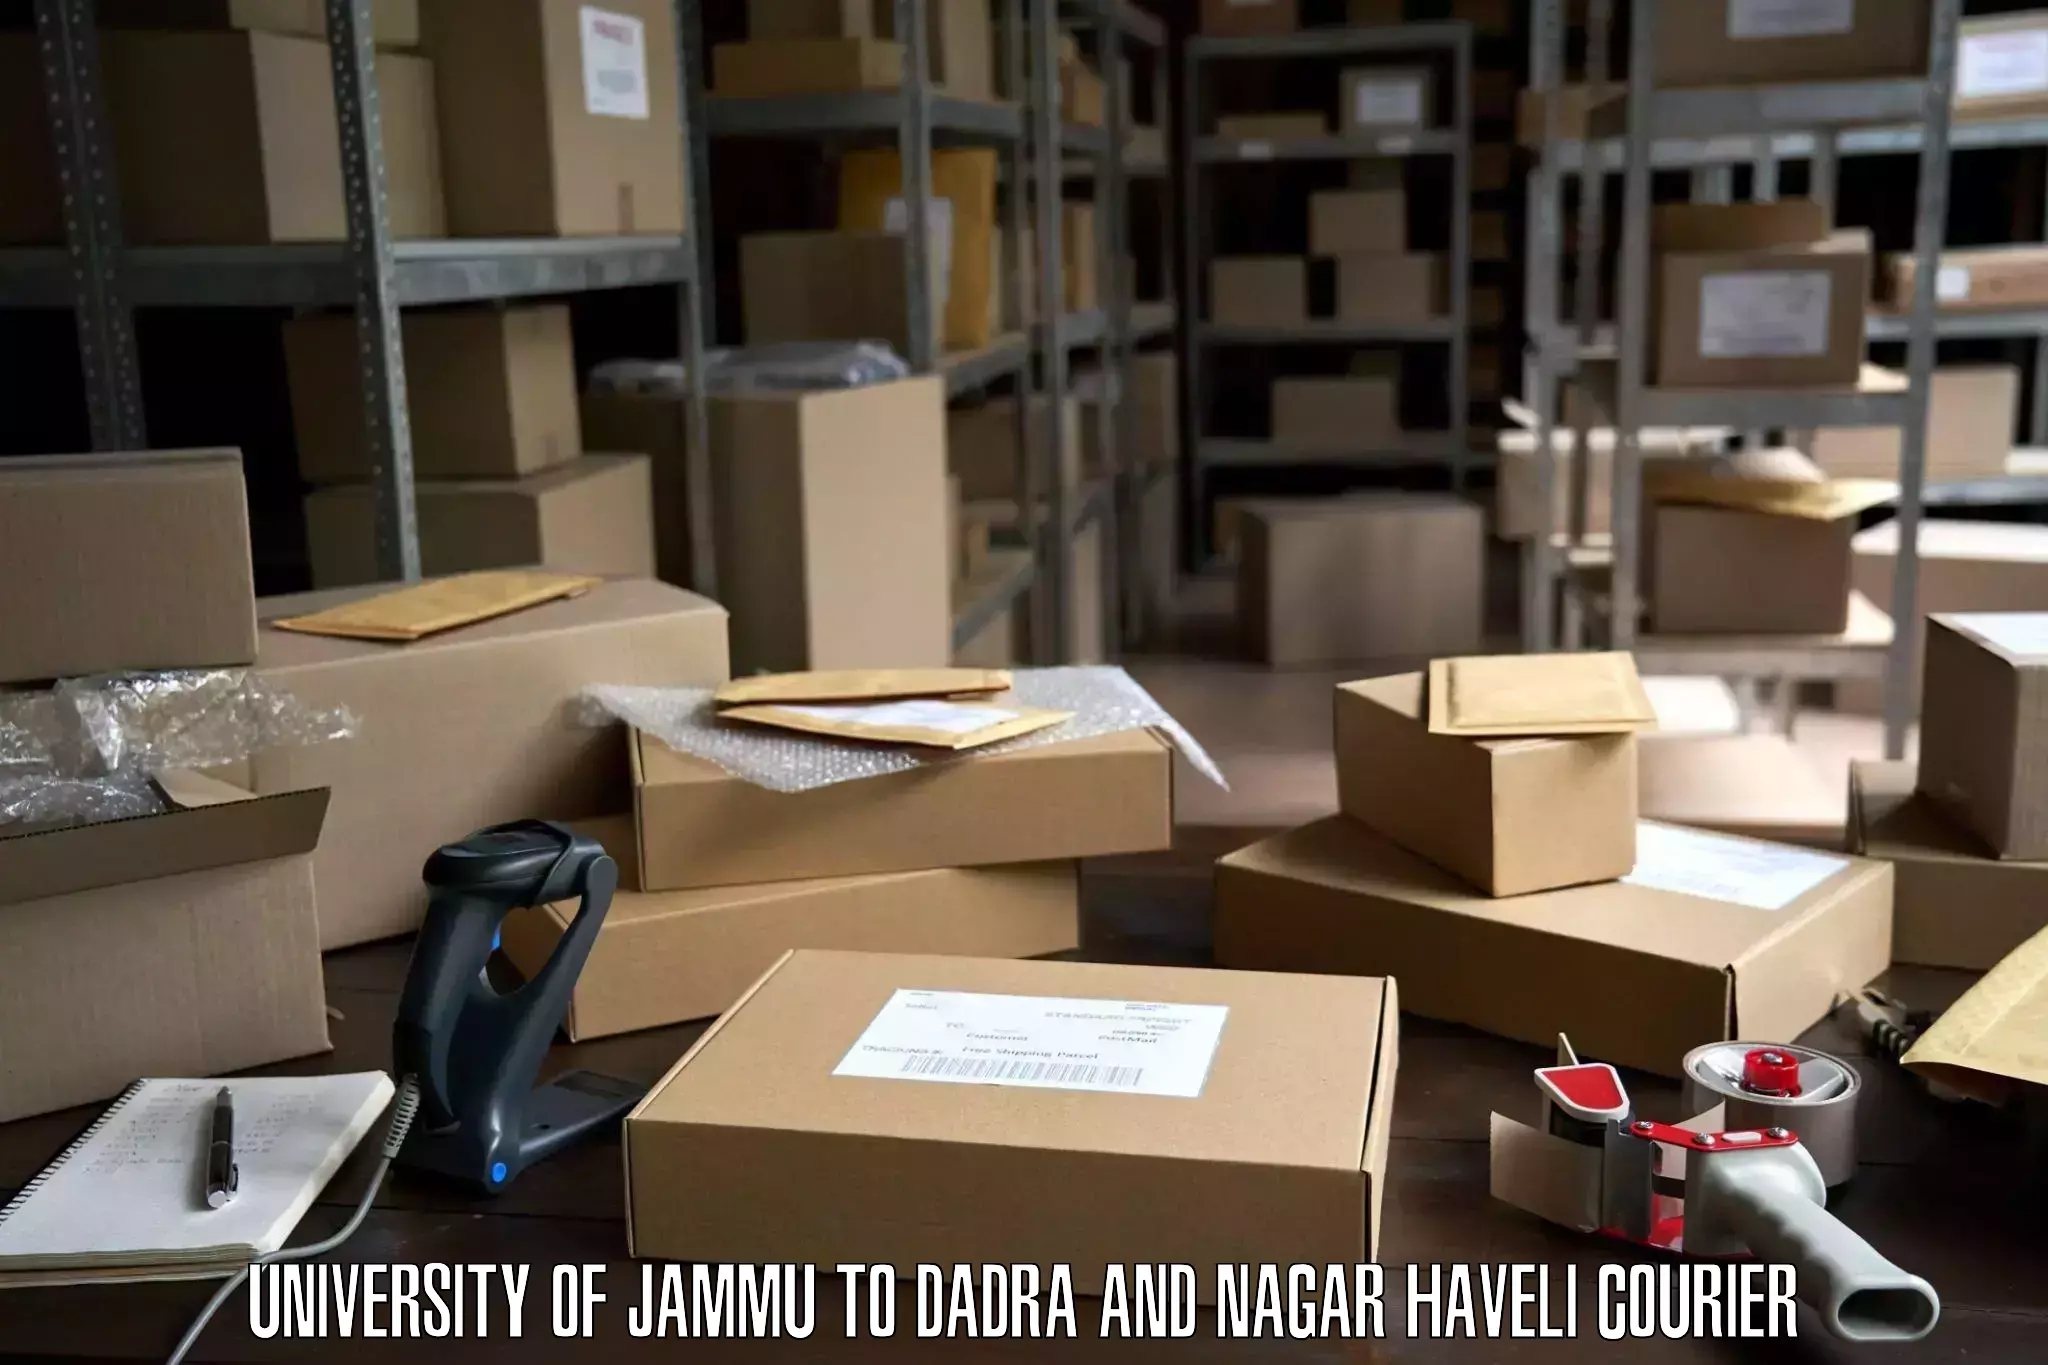 Trusted relocation experts University of Jammu to Silvassa